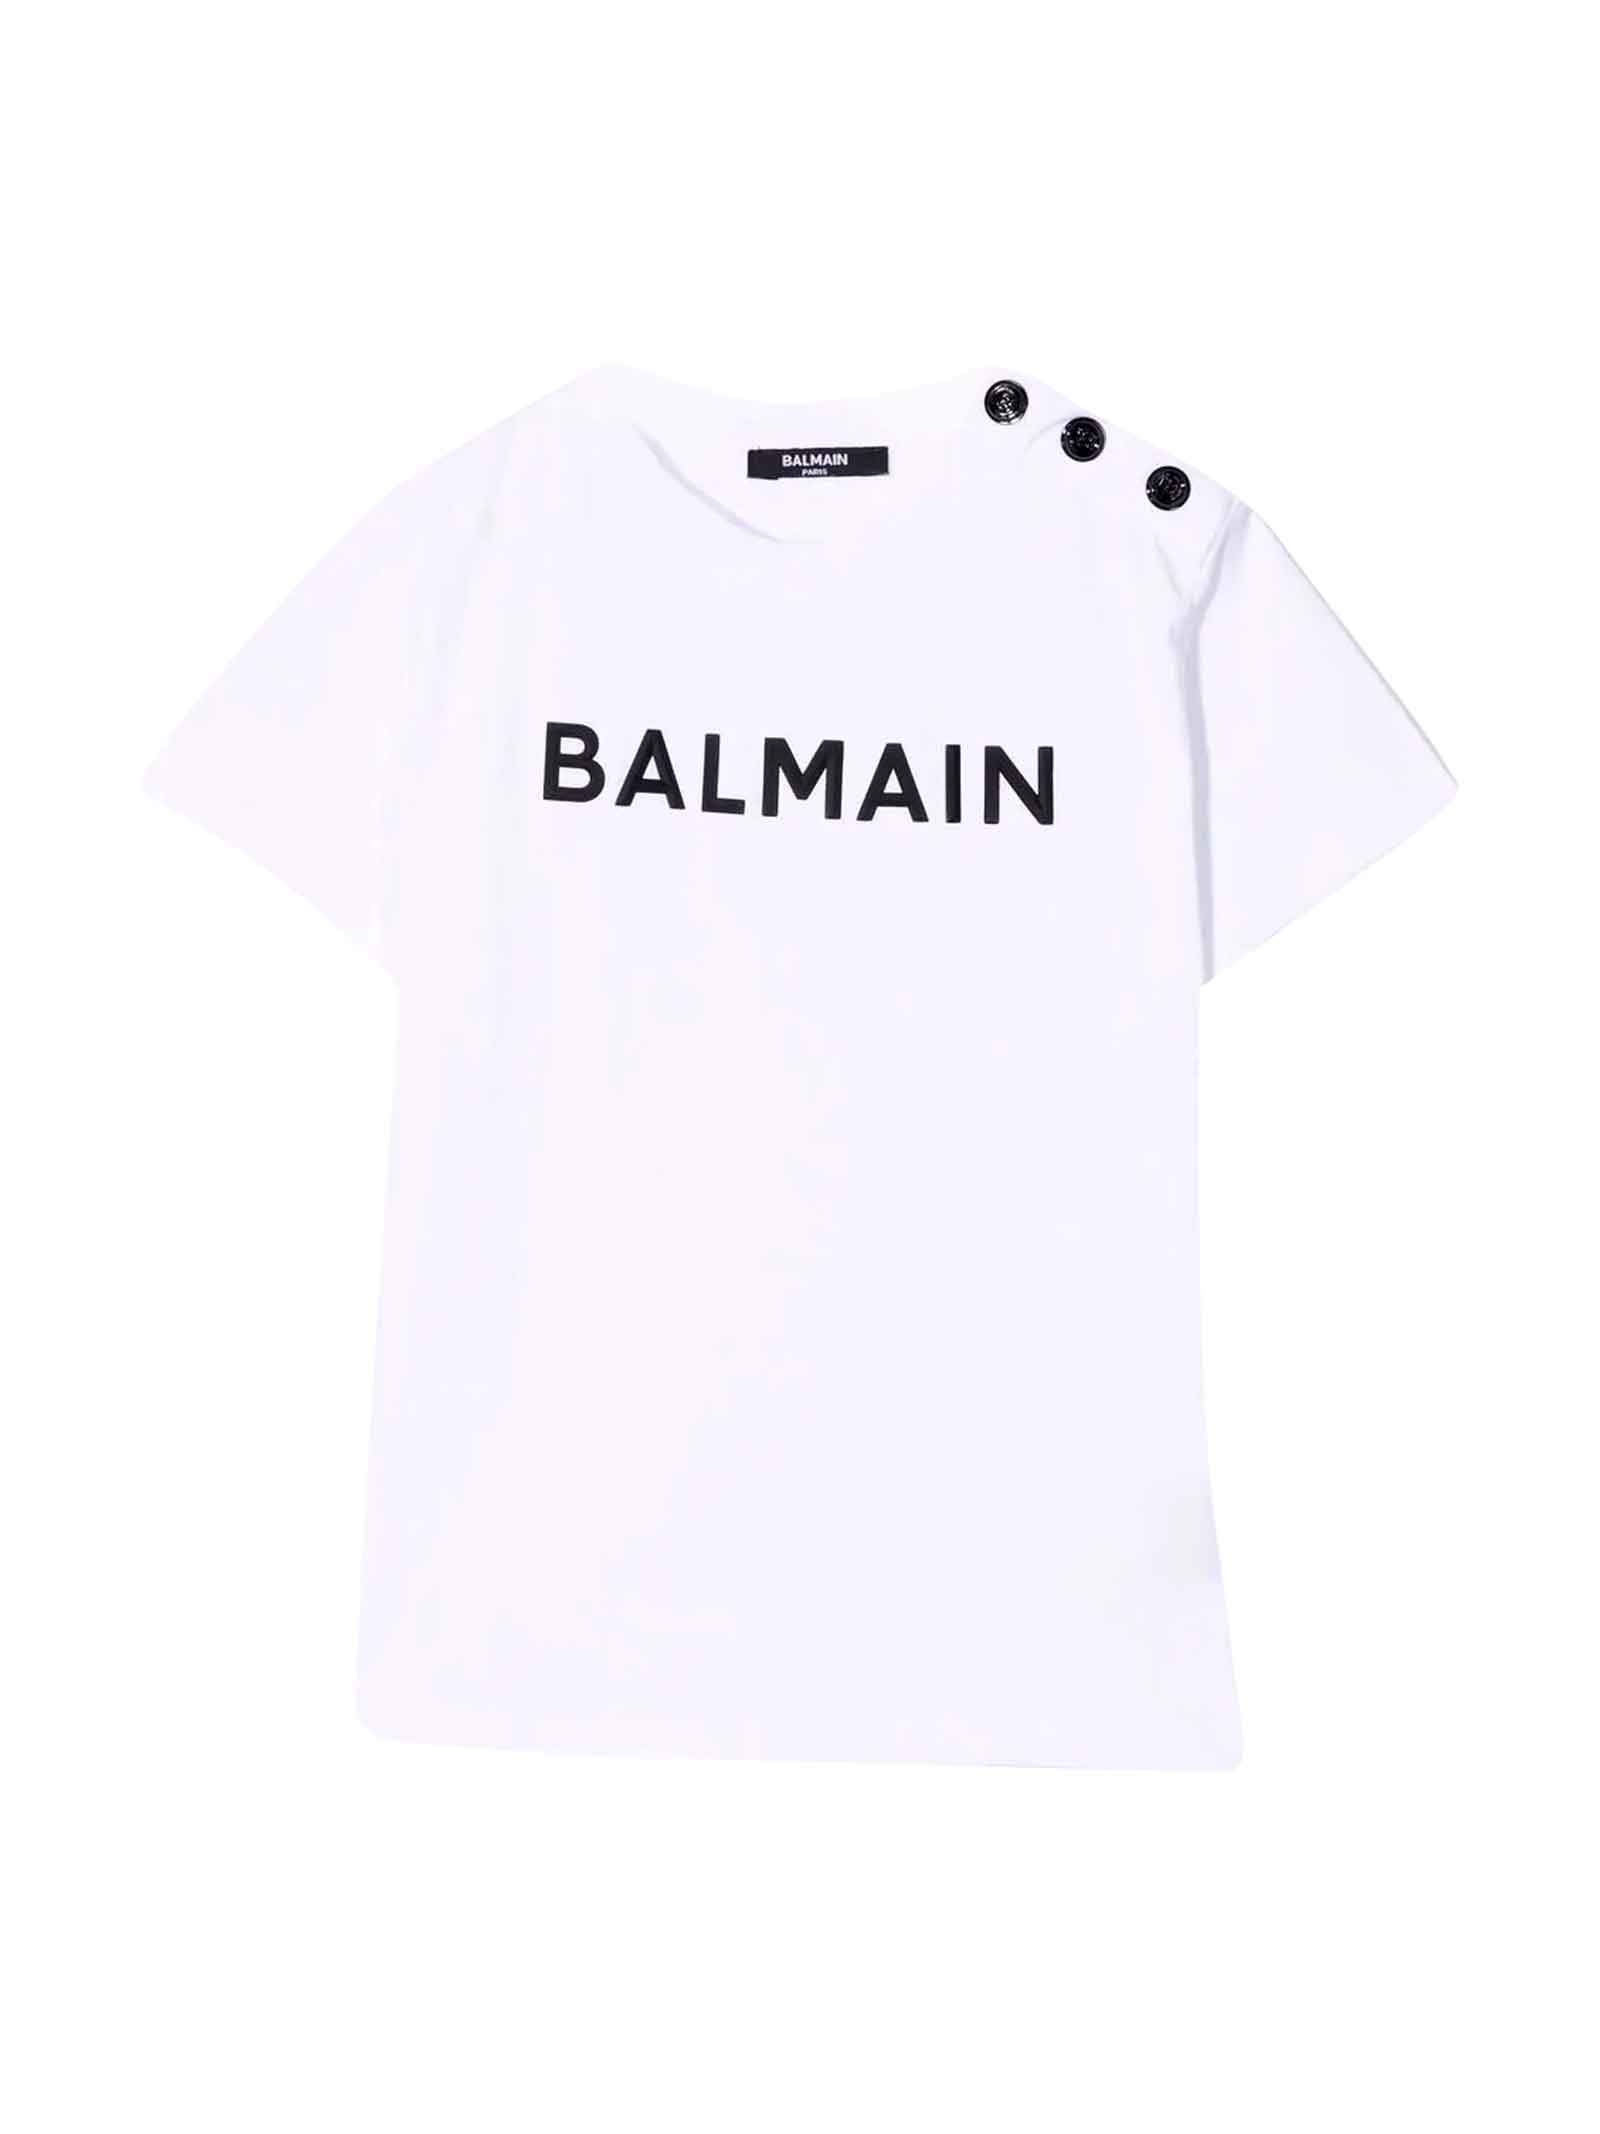 Balmain Unisex White Teen T-shirt